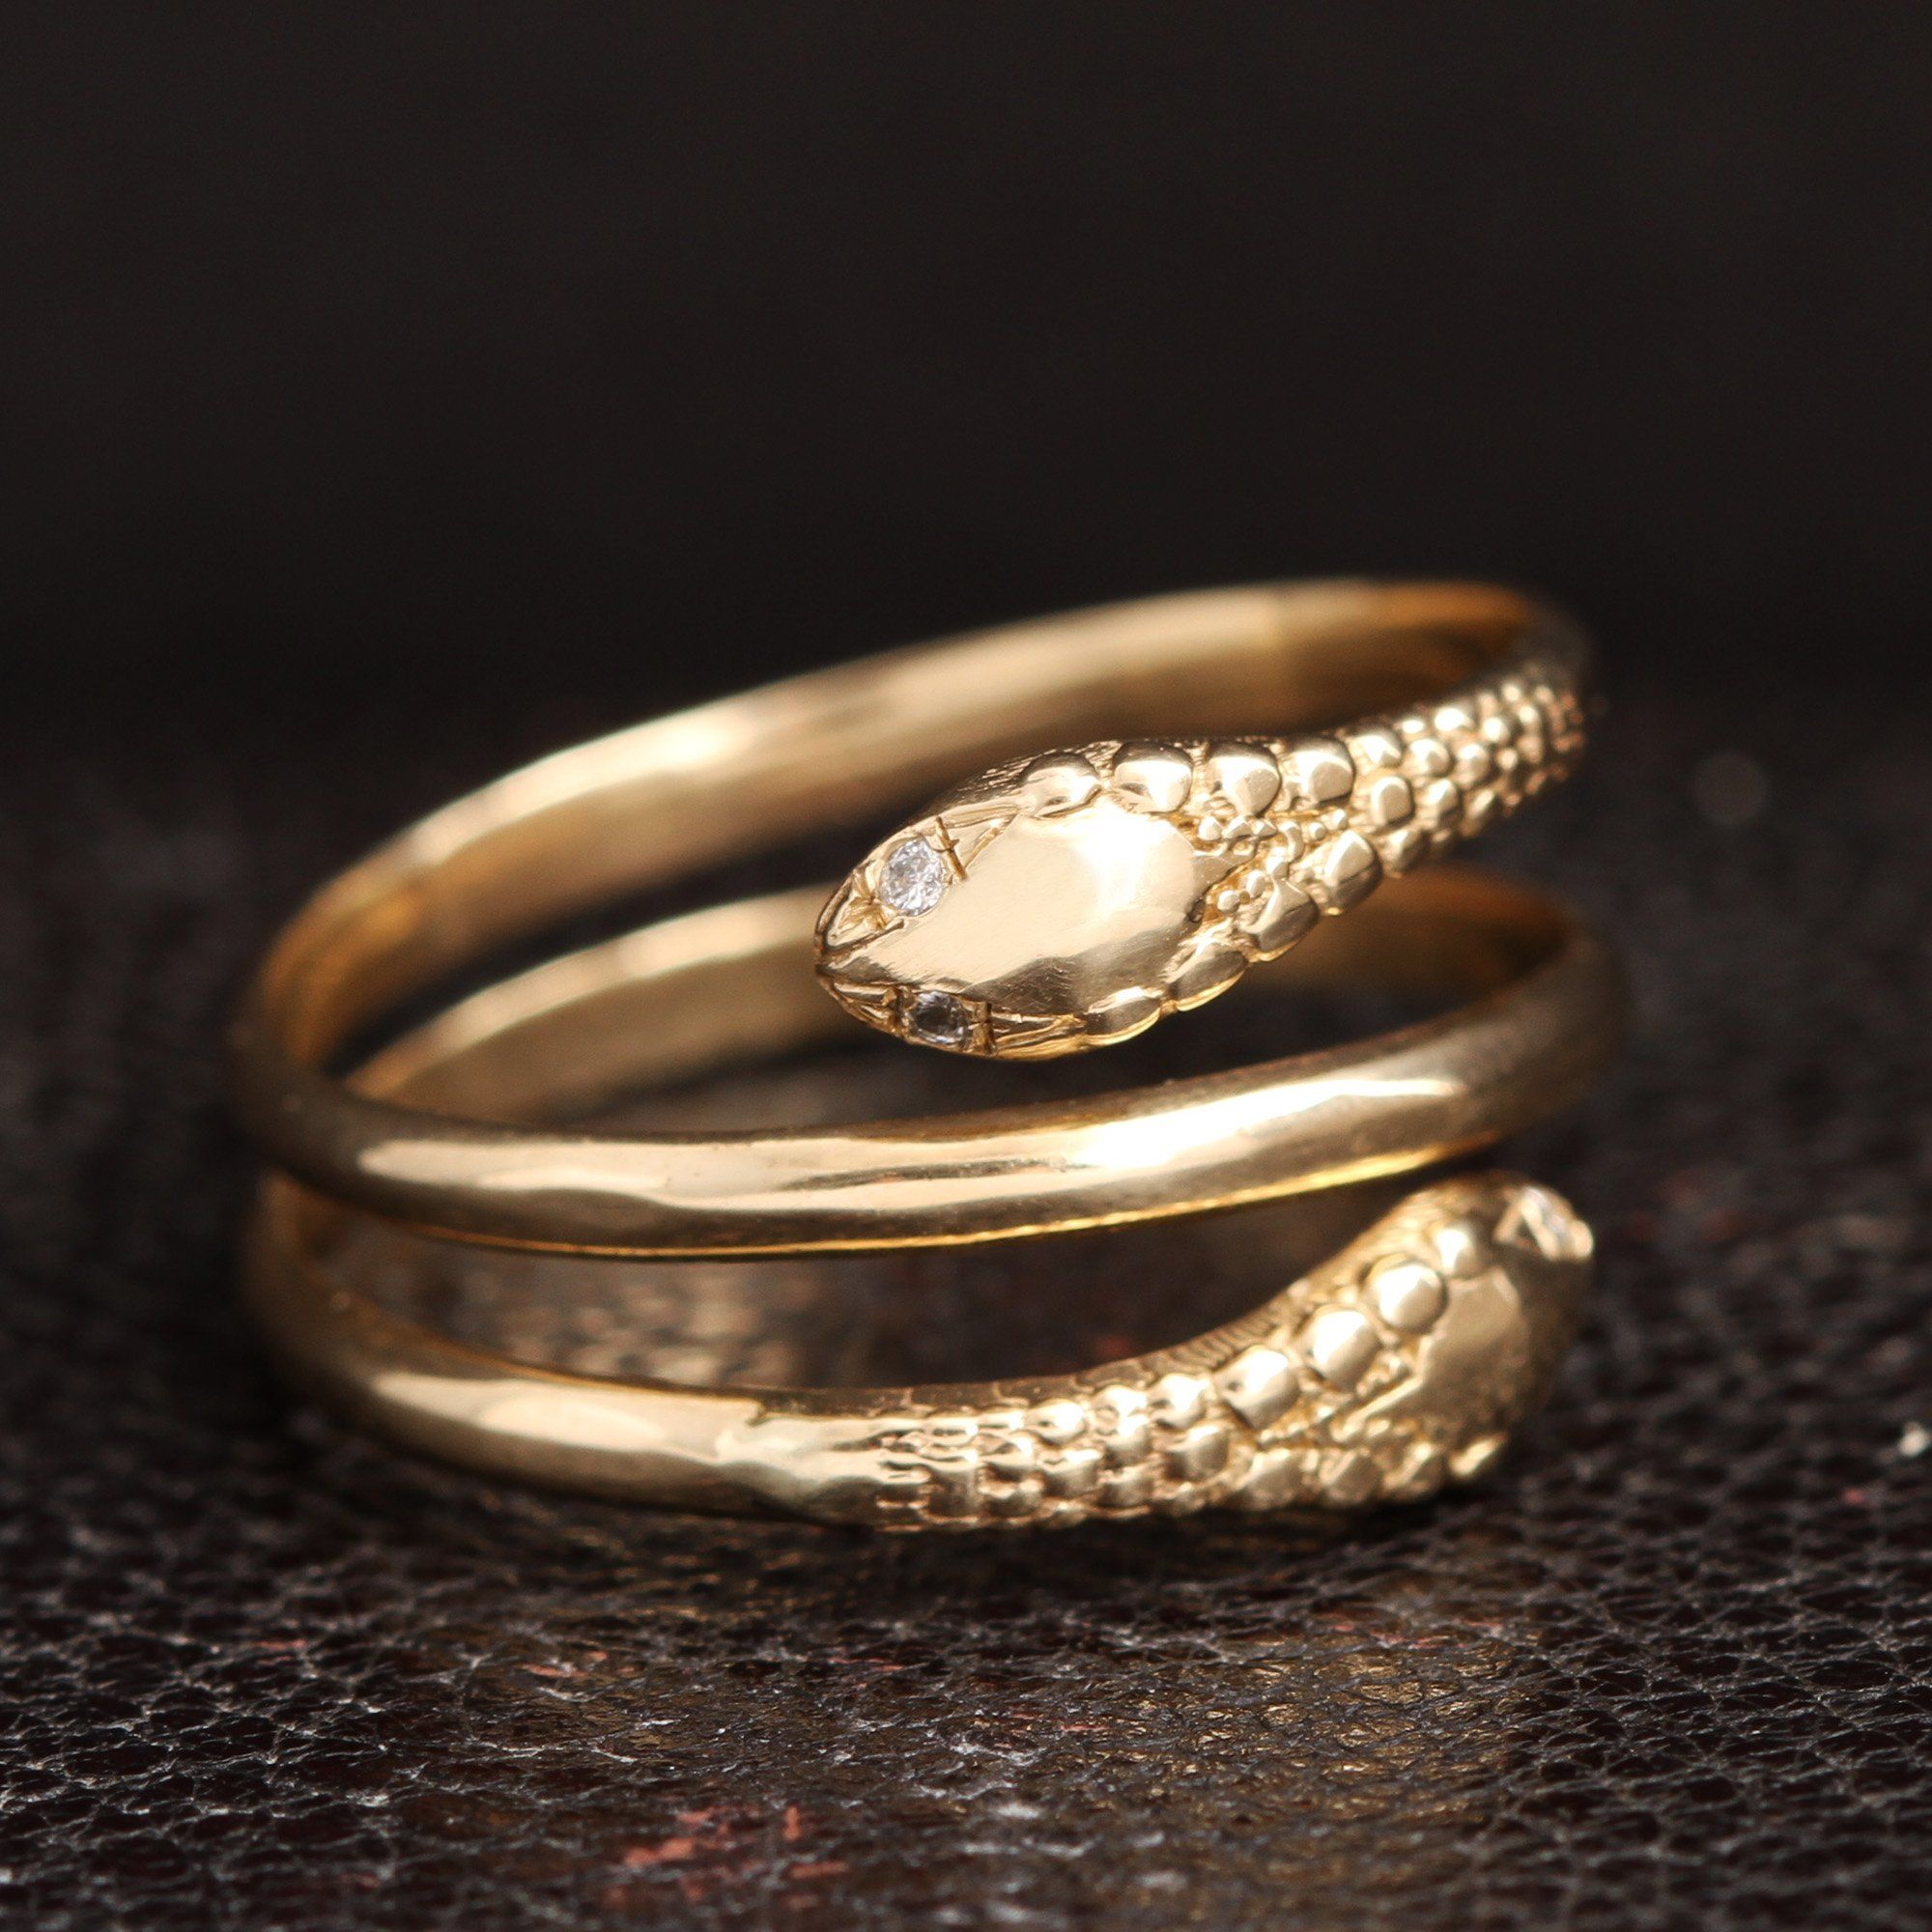 Two-Headed Snake Ring — Erica Weiner